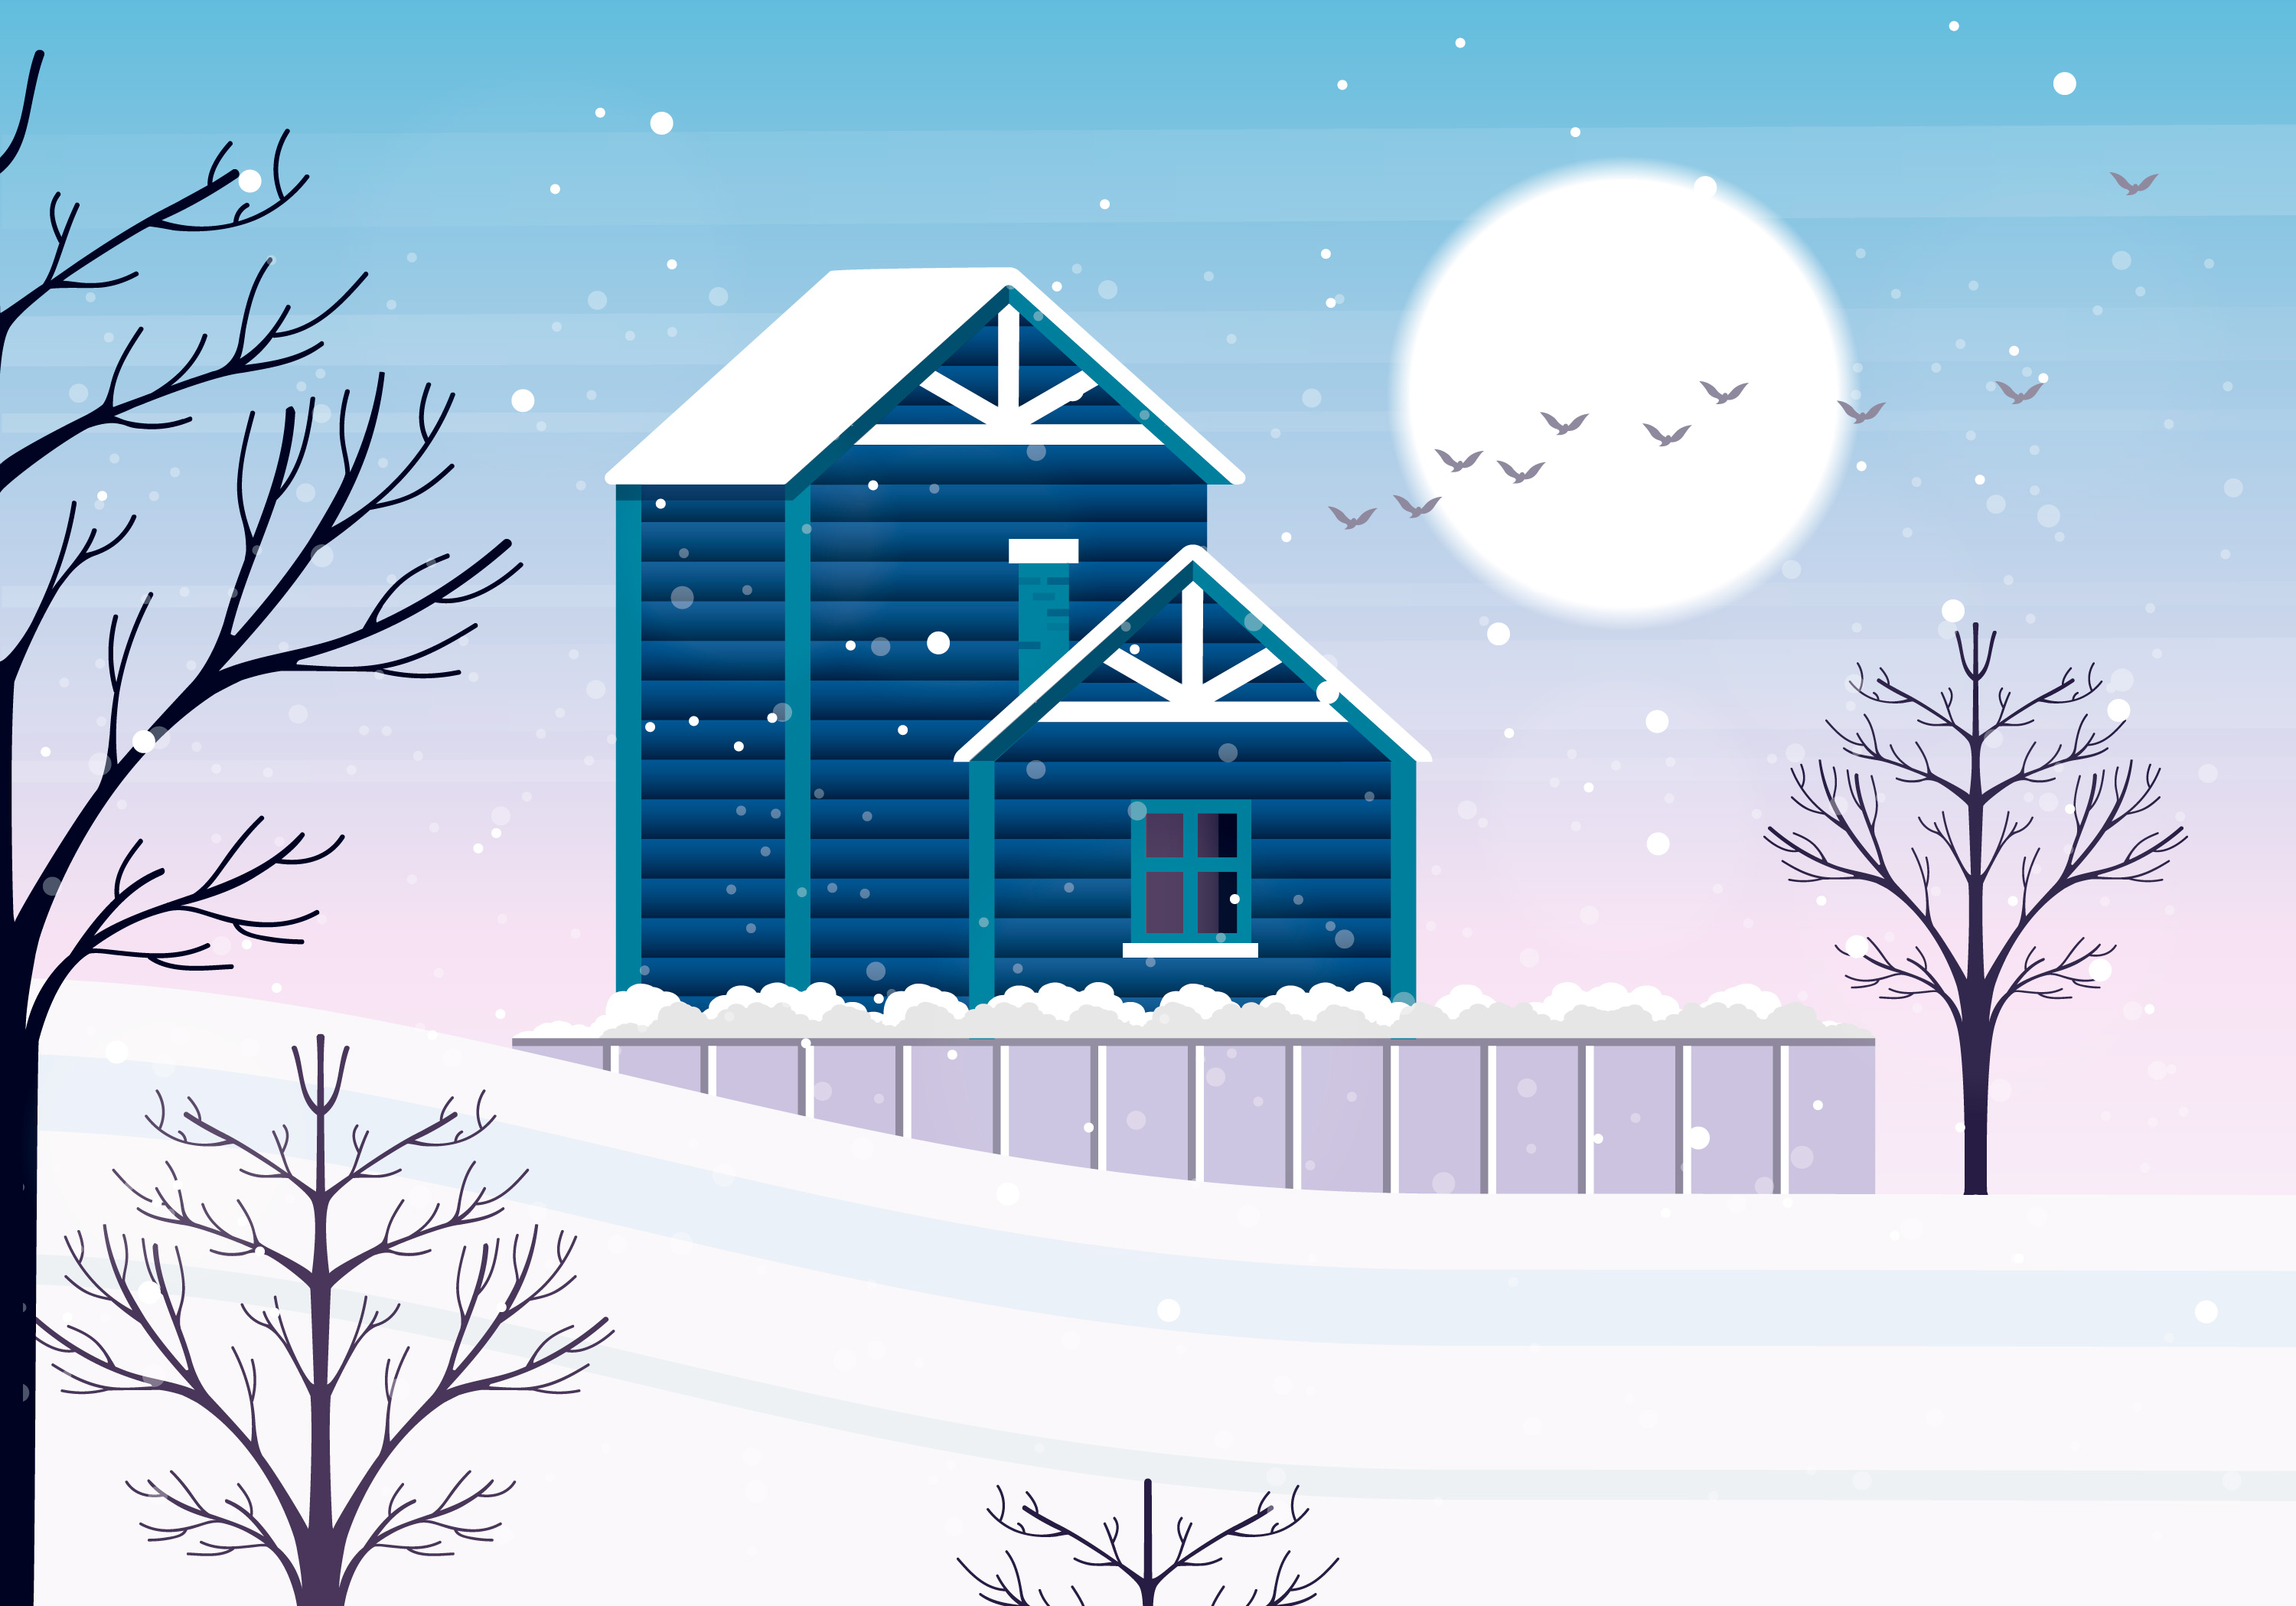 Vector Winter Landscape Illustration 275913 Download Free Vectors, Clipart Graphics & Vector Art